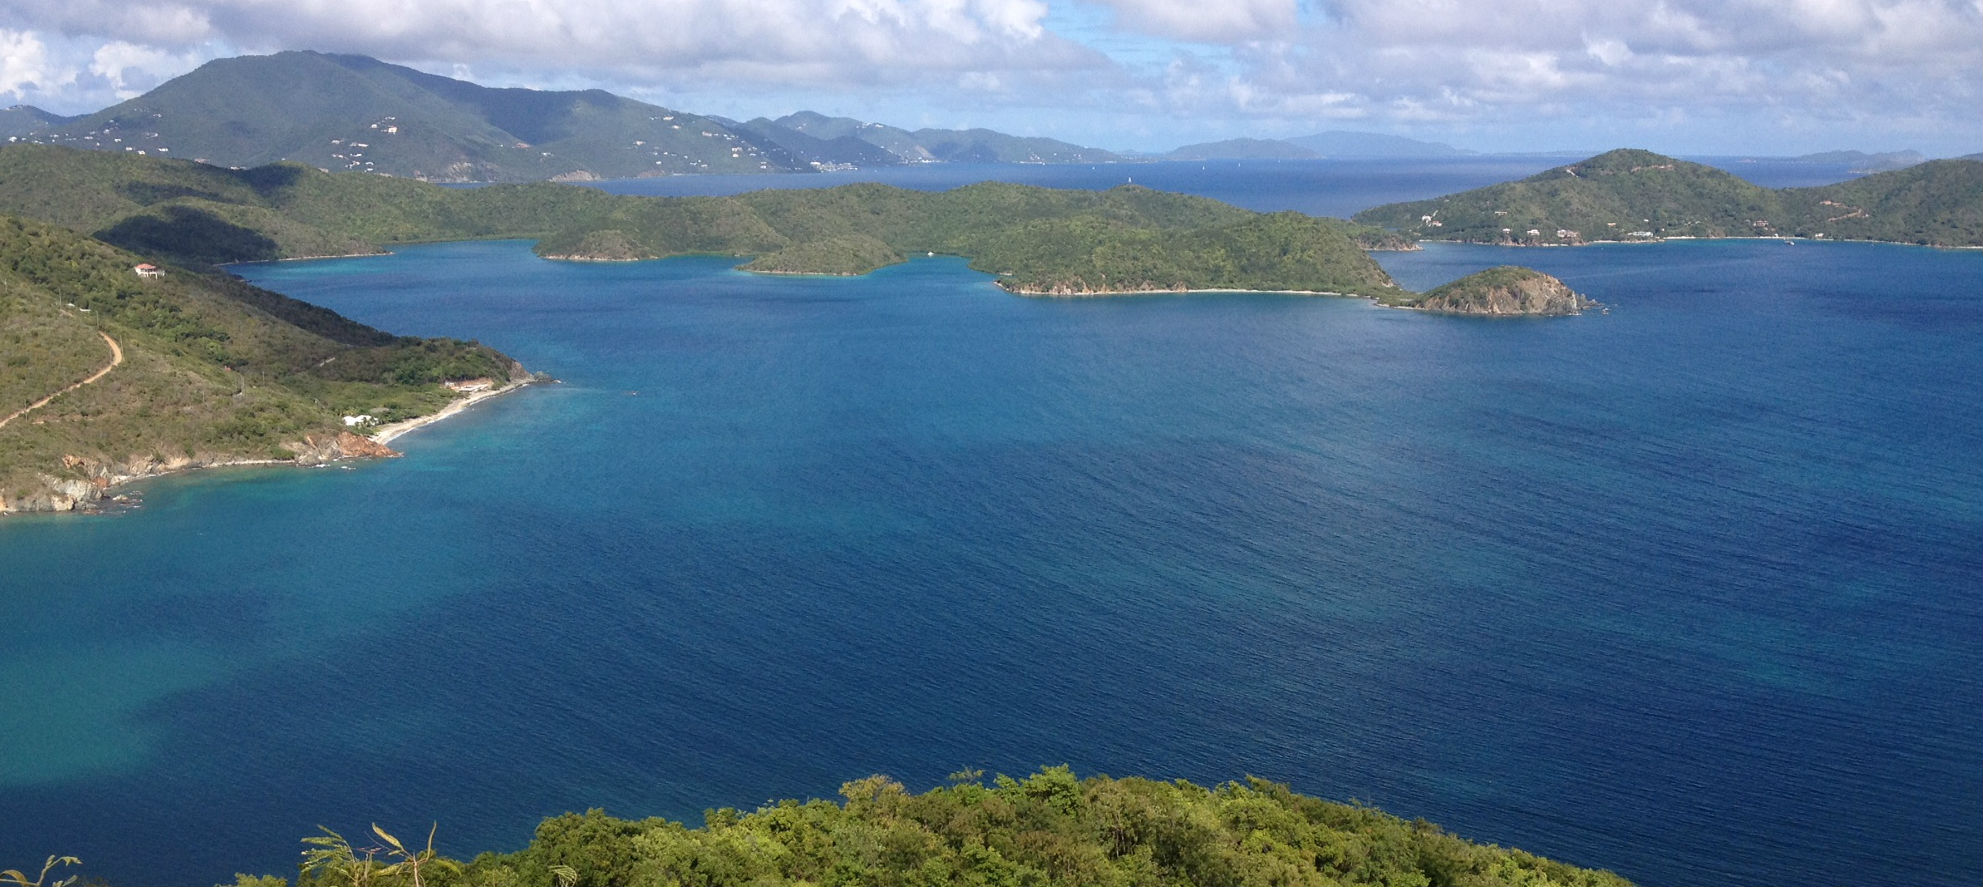 National monument of British Virgin Islands - Virgin Islands Coral Reef National Monument